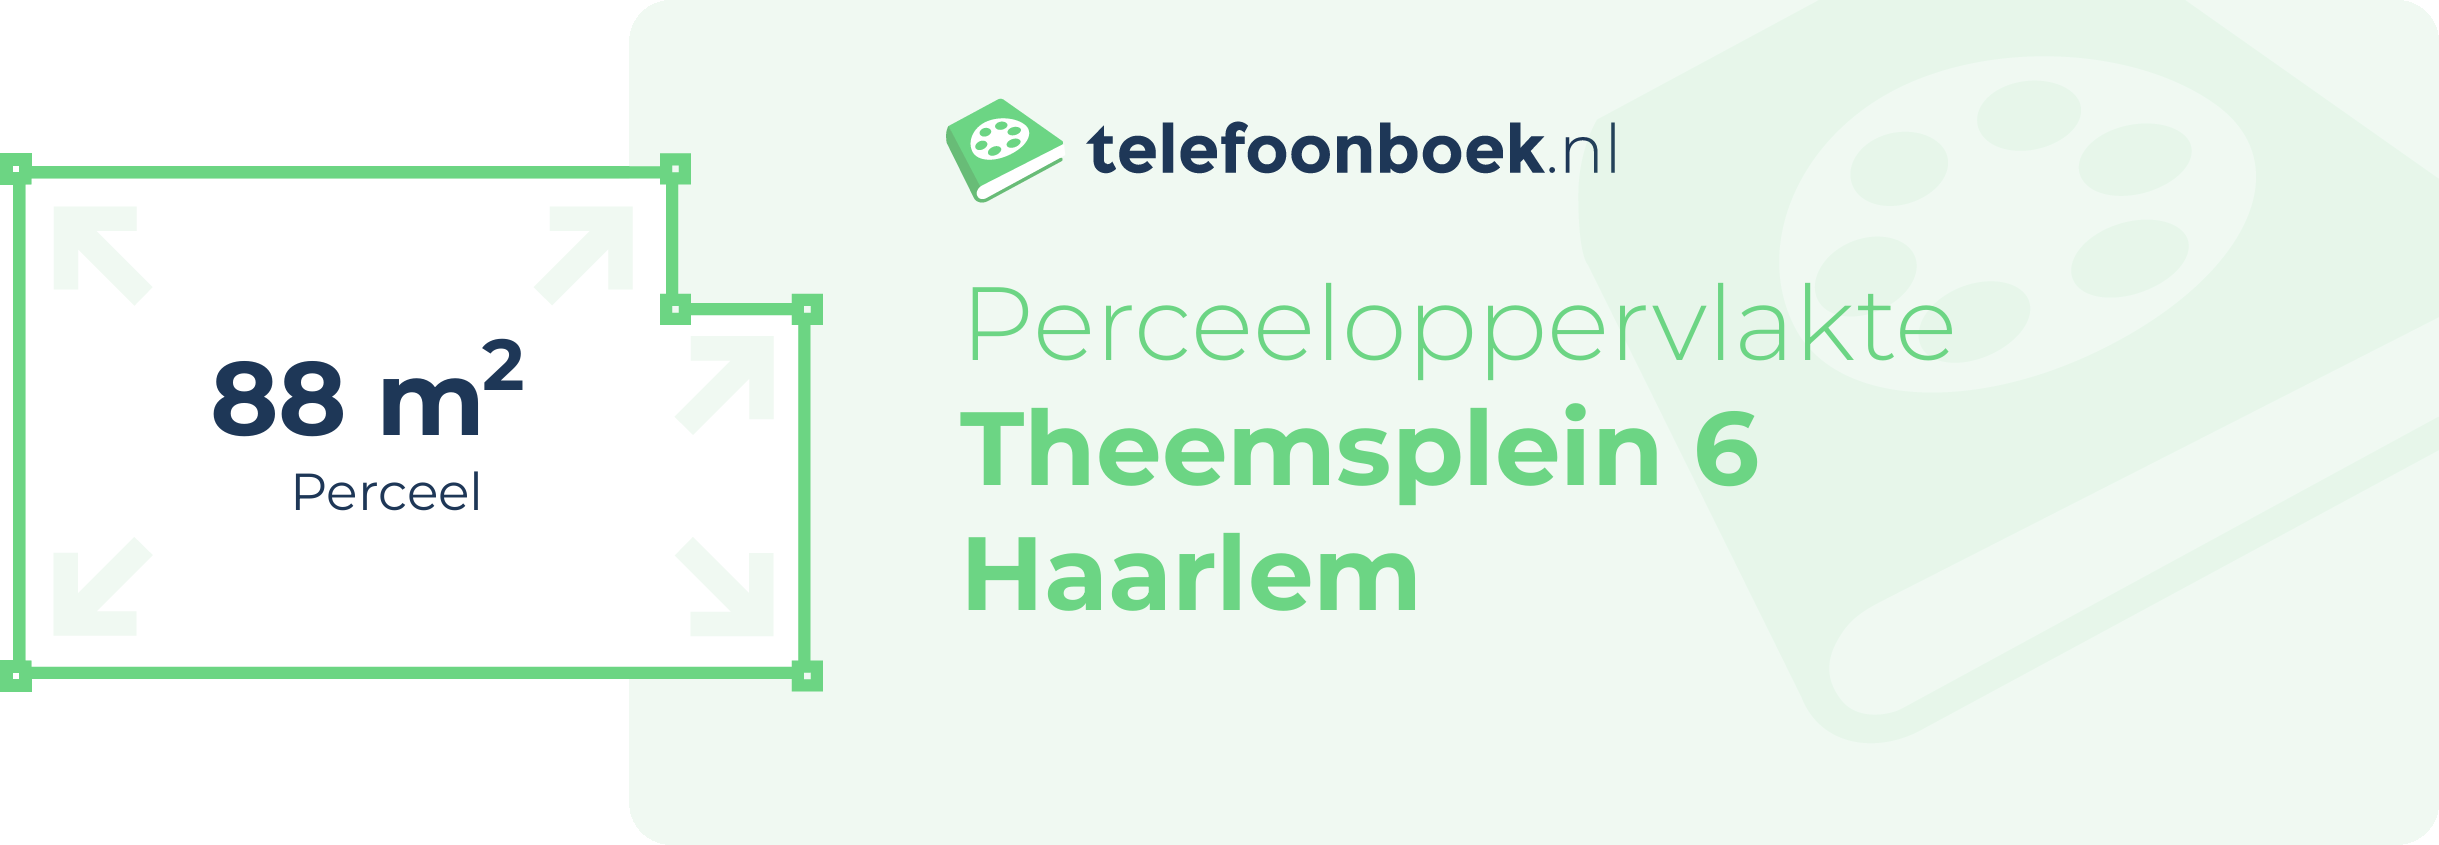 Perceeloppervlakte Theemsplein 6 Haarlem